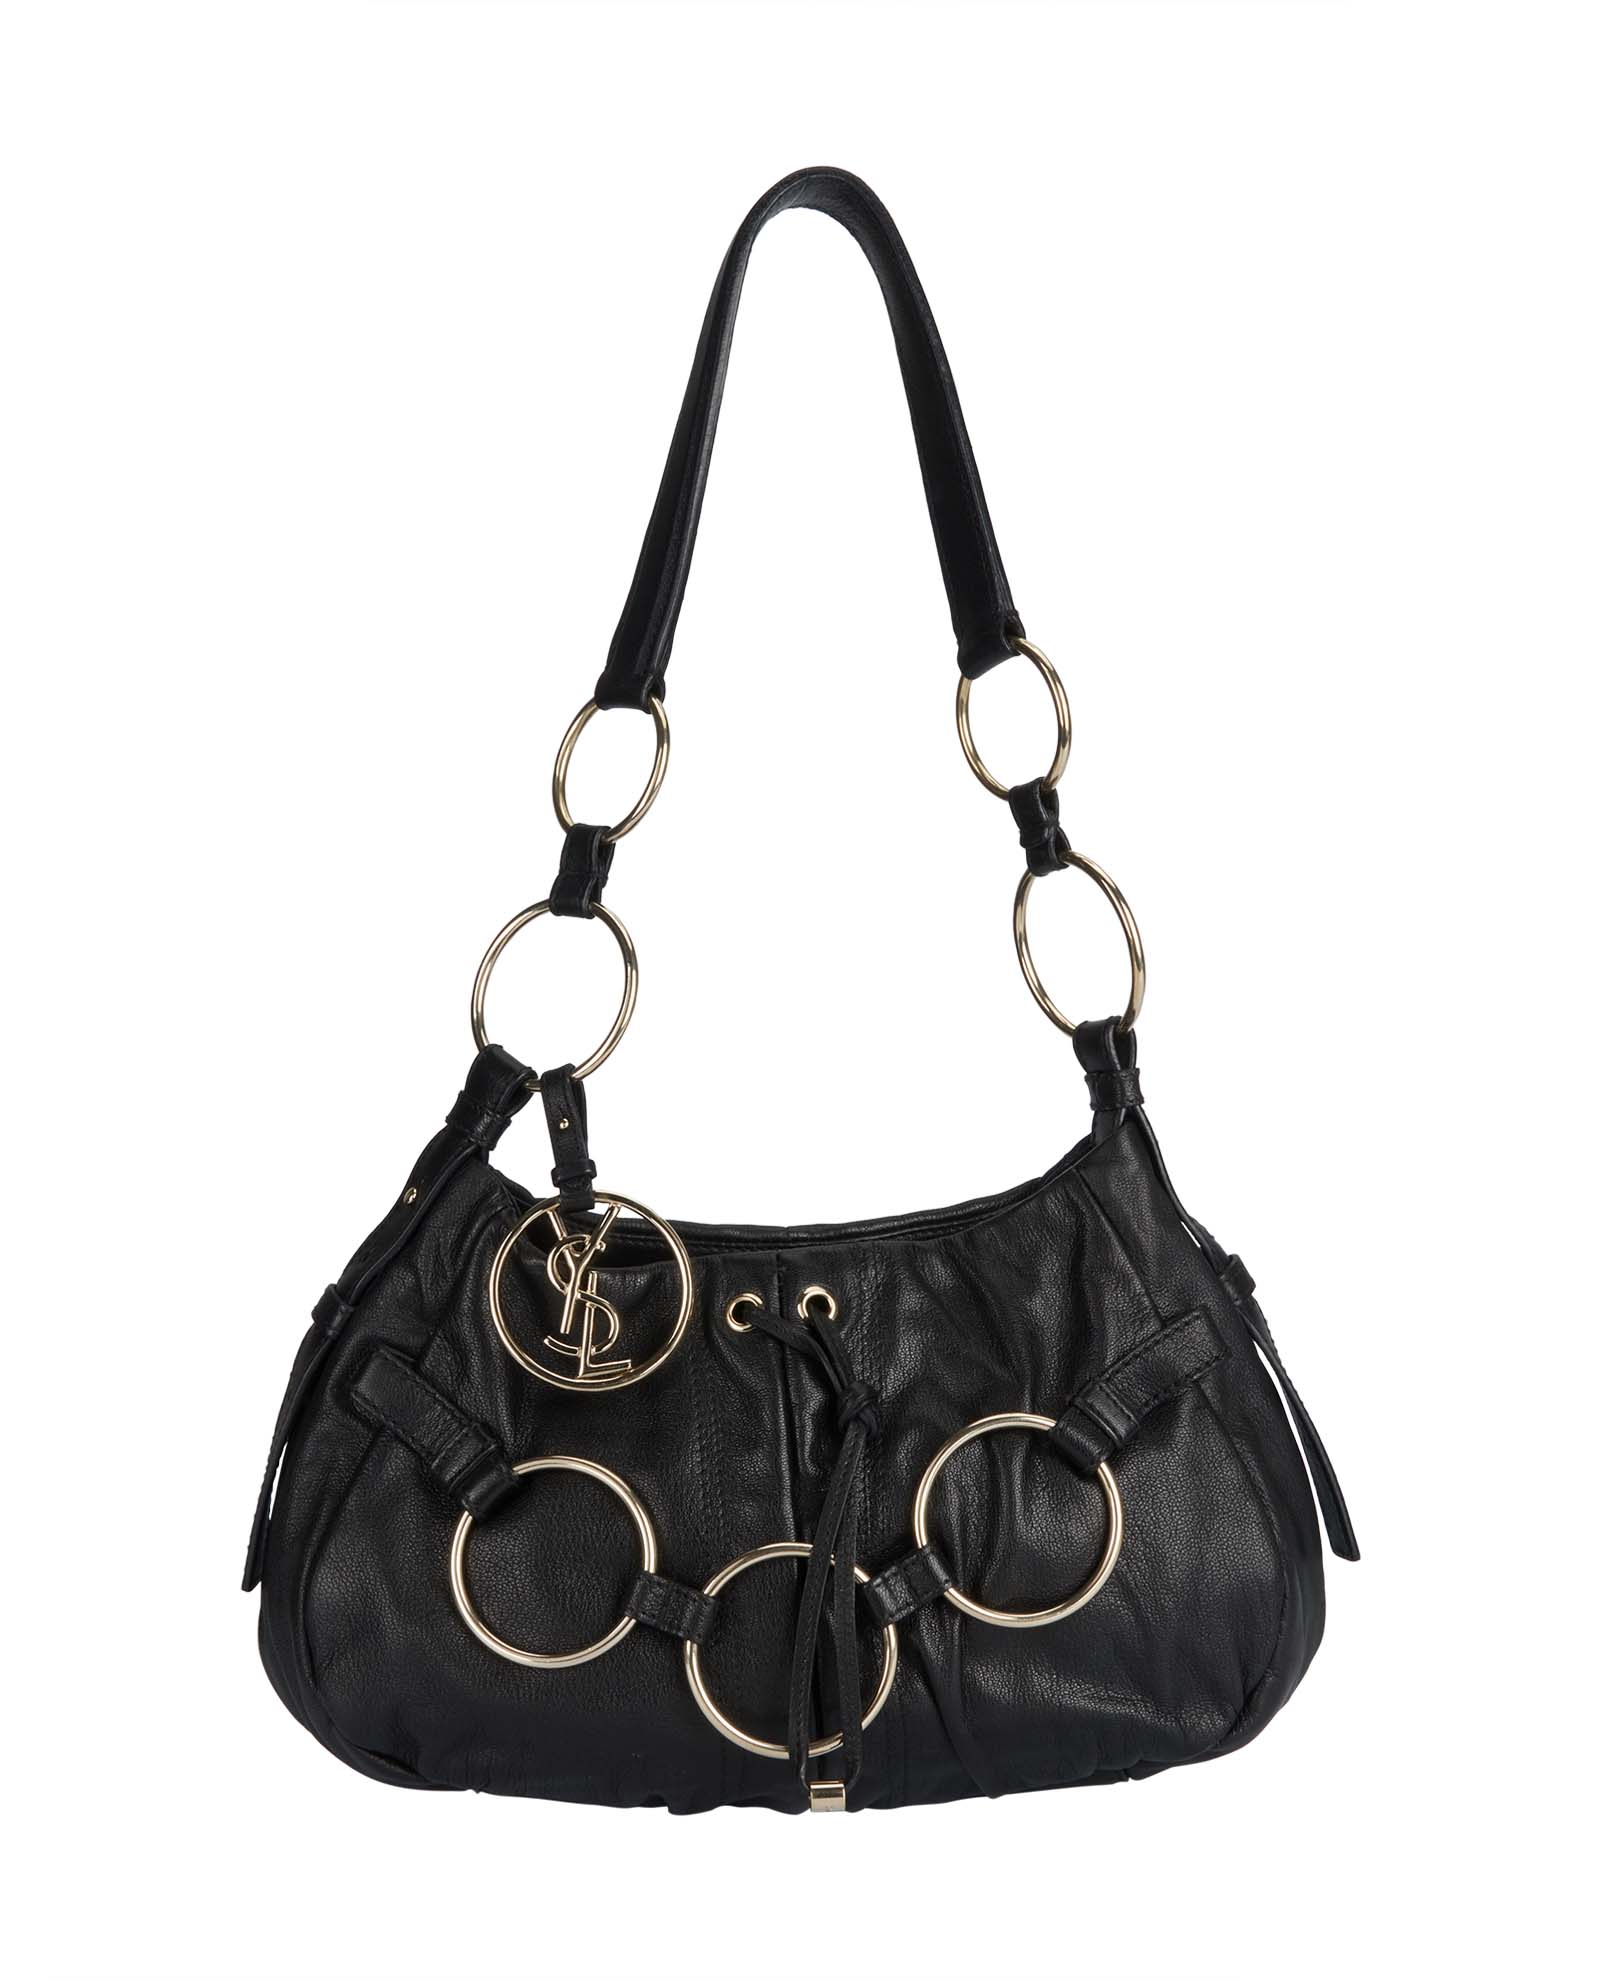 Saint Laurent Handbag  Buy or Sell your Designer handbags